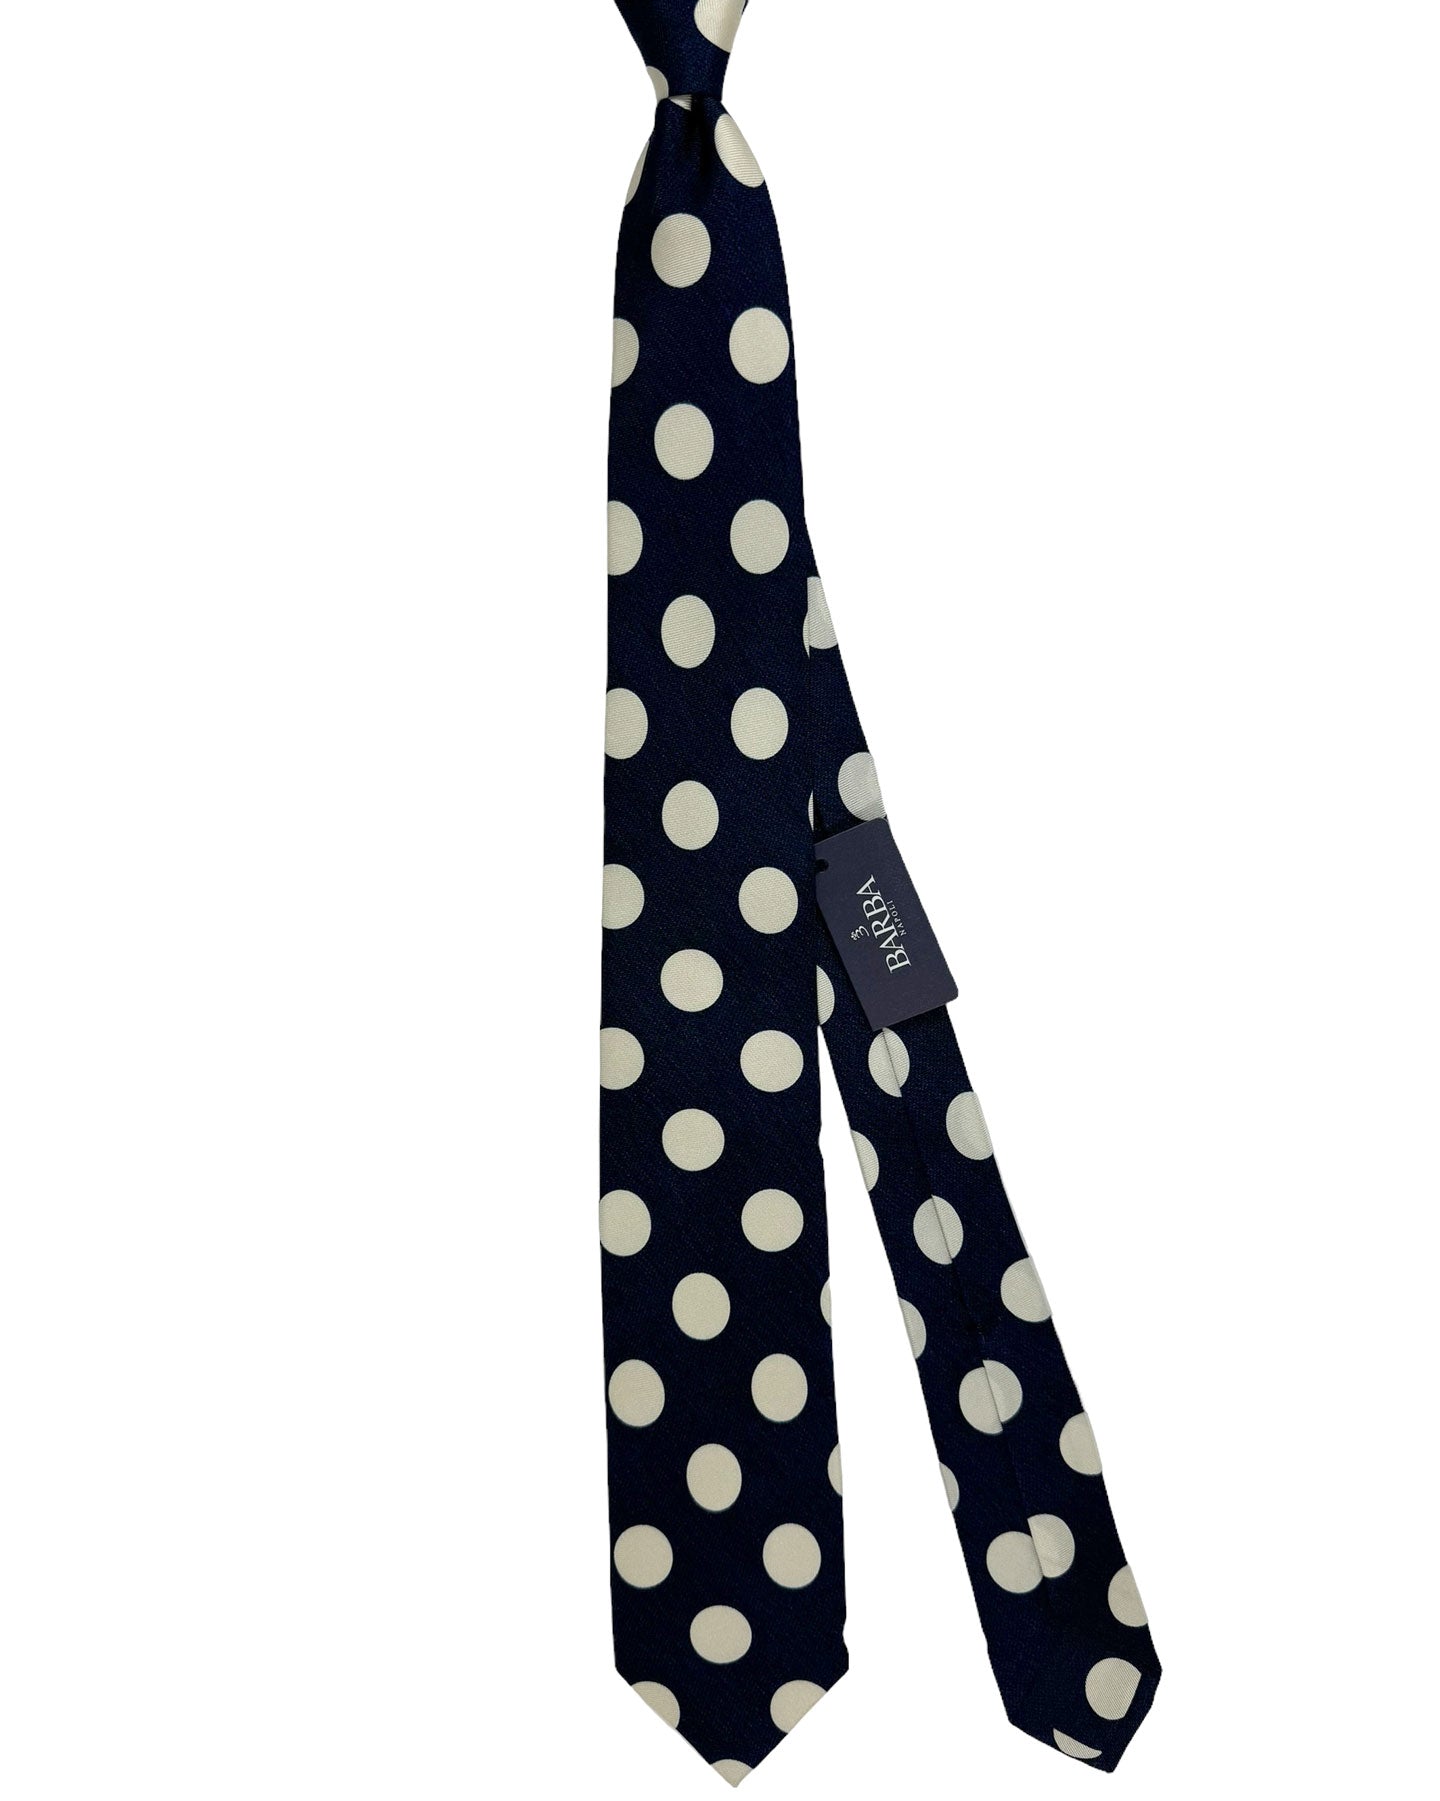 Barba Sevenfold Tie Dark Navy White Silver Polka Dots Design - Sartorial Neckwear